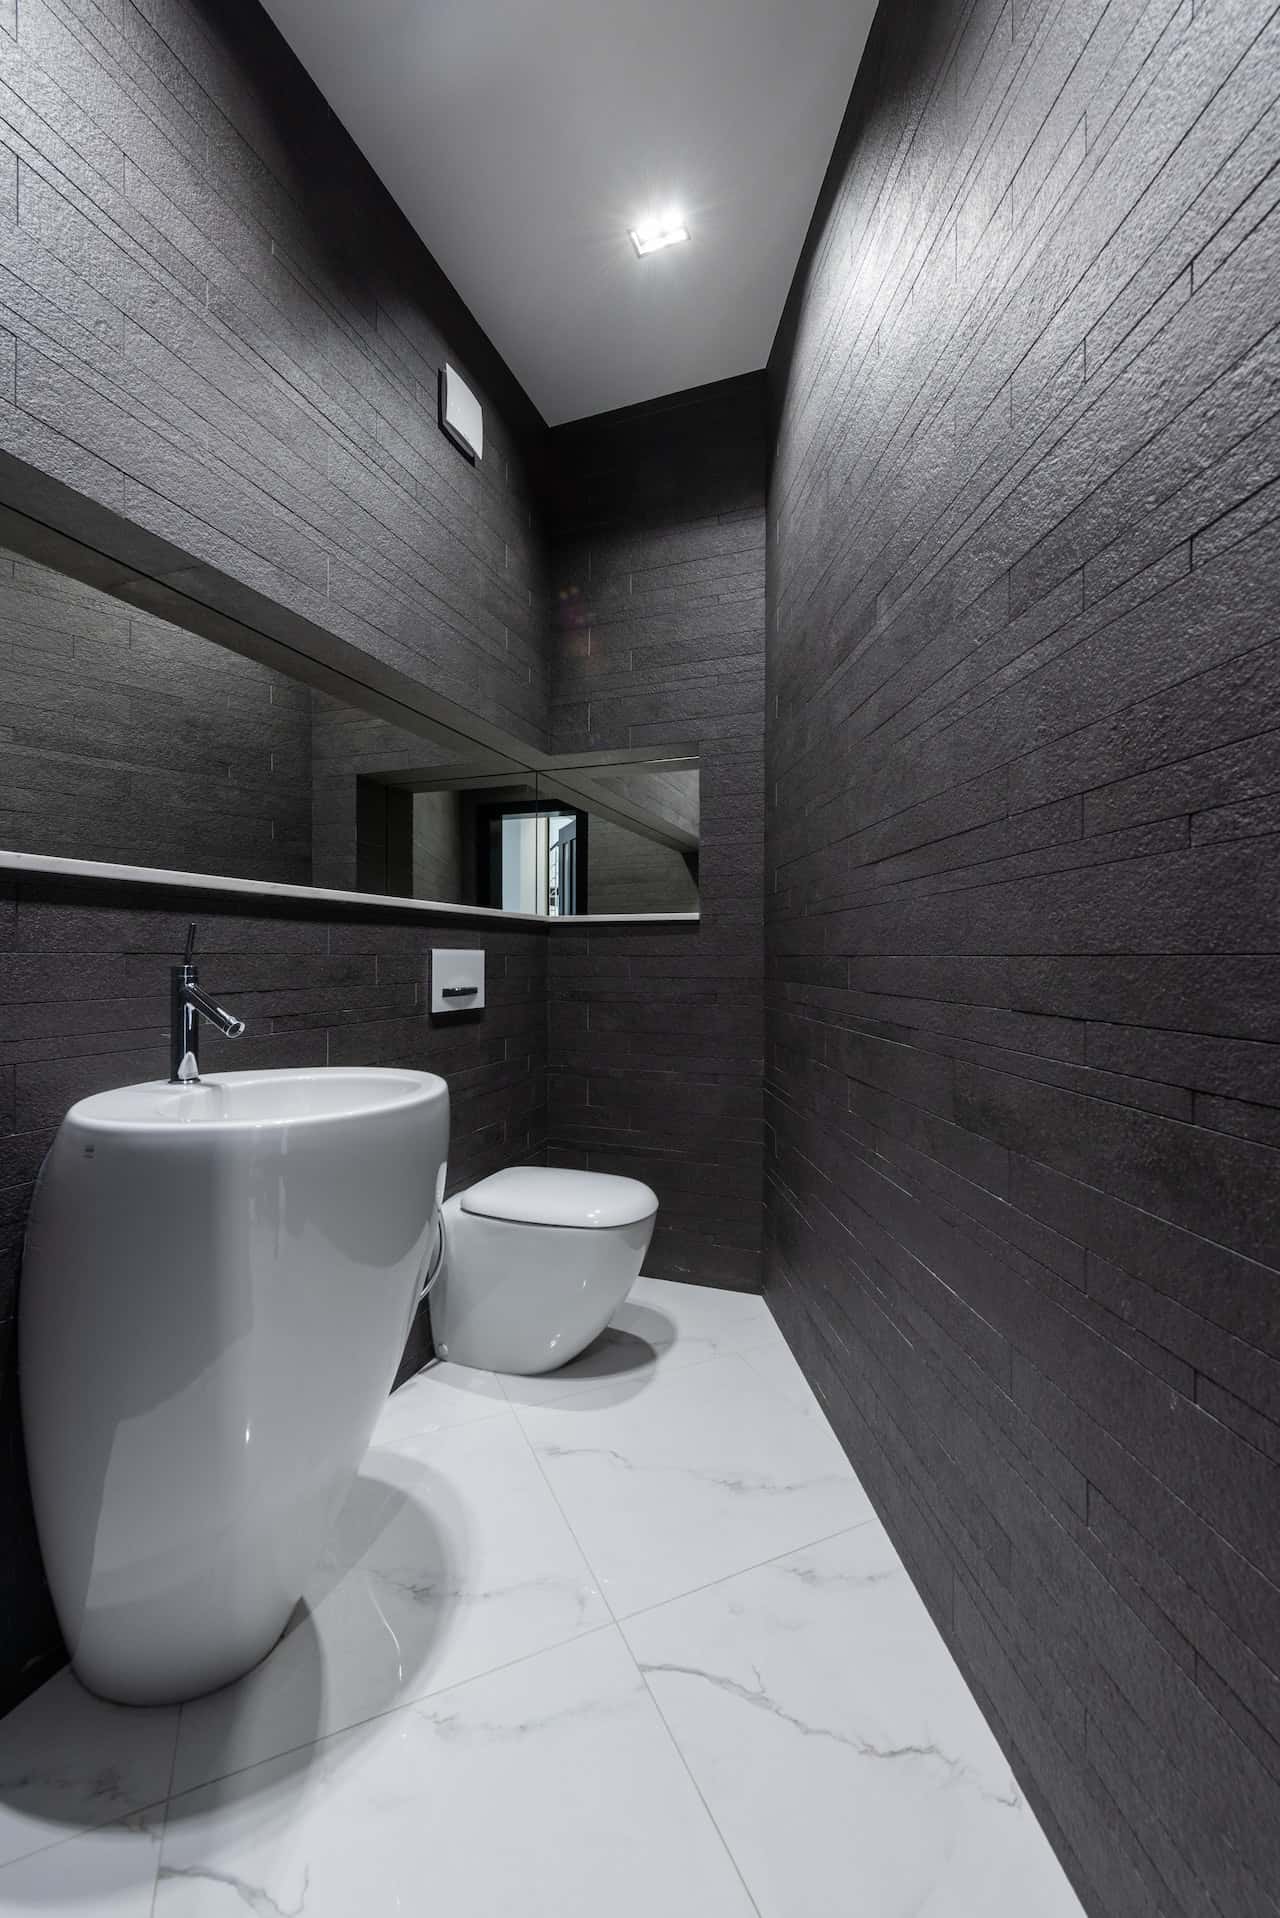 Bathroom Tiles Design Texture